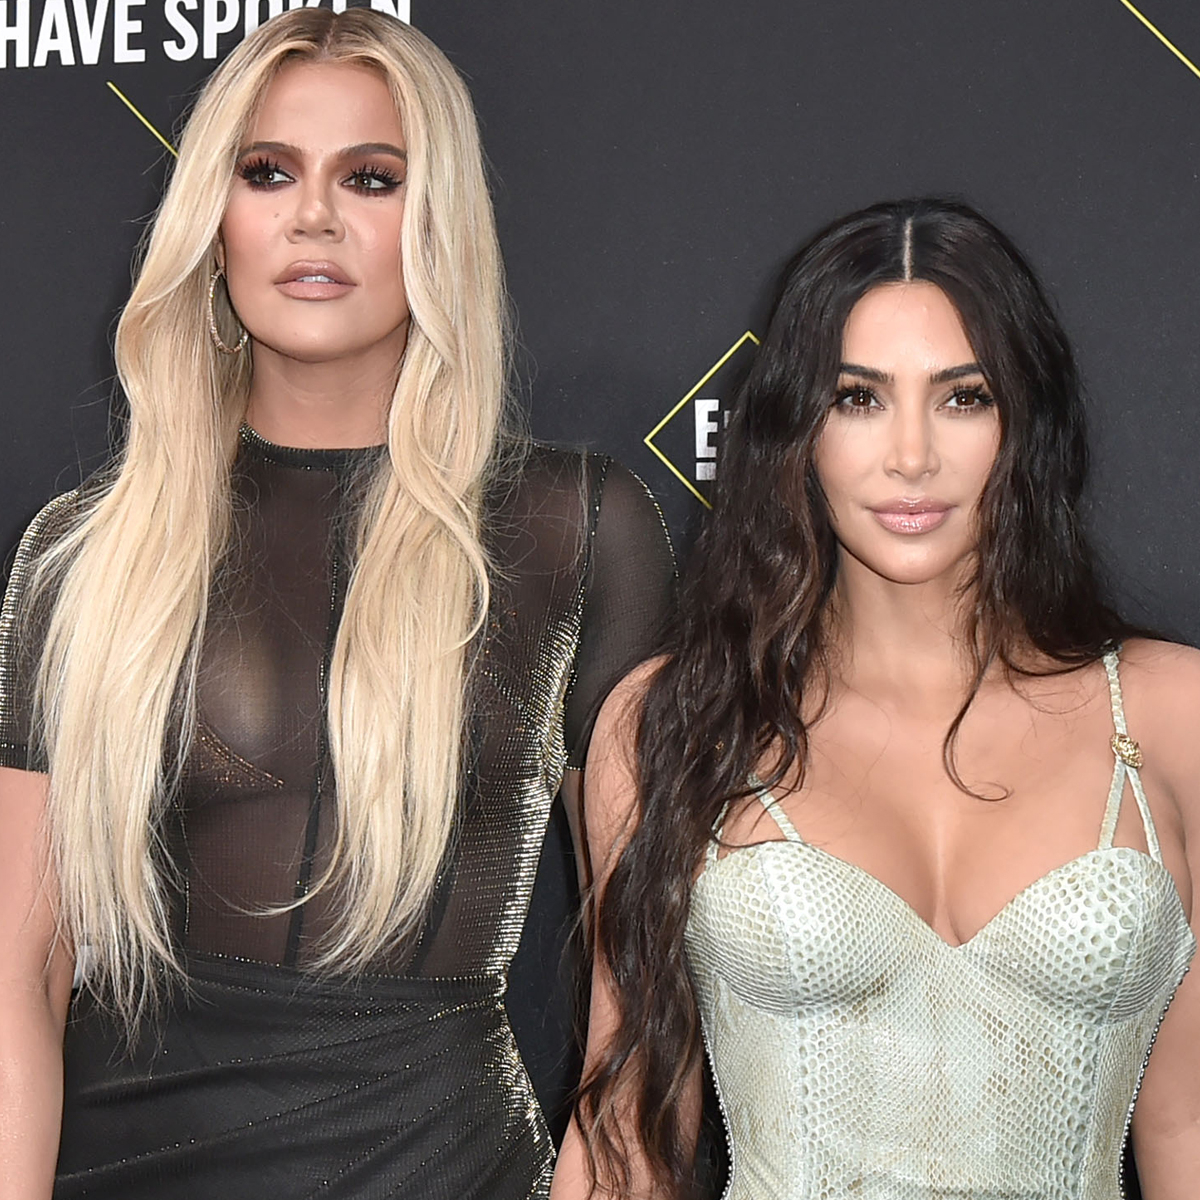 Khloe Kardashian Calls Kim Kardashian the “Poster Child of Resilience”